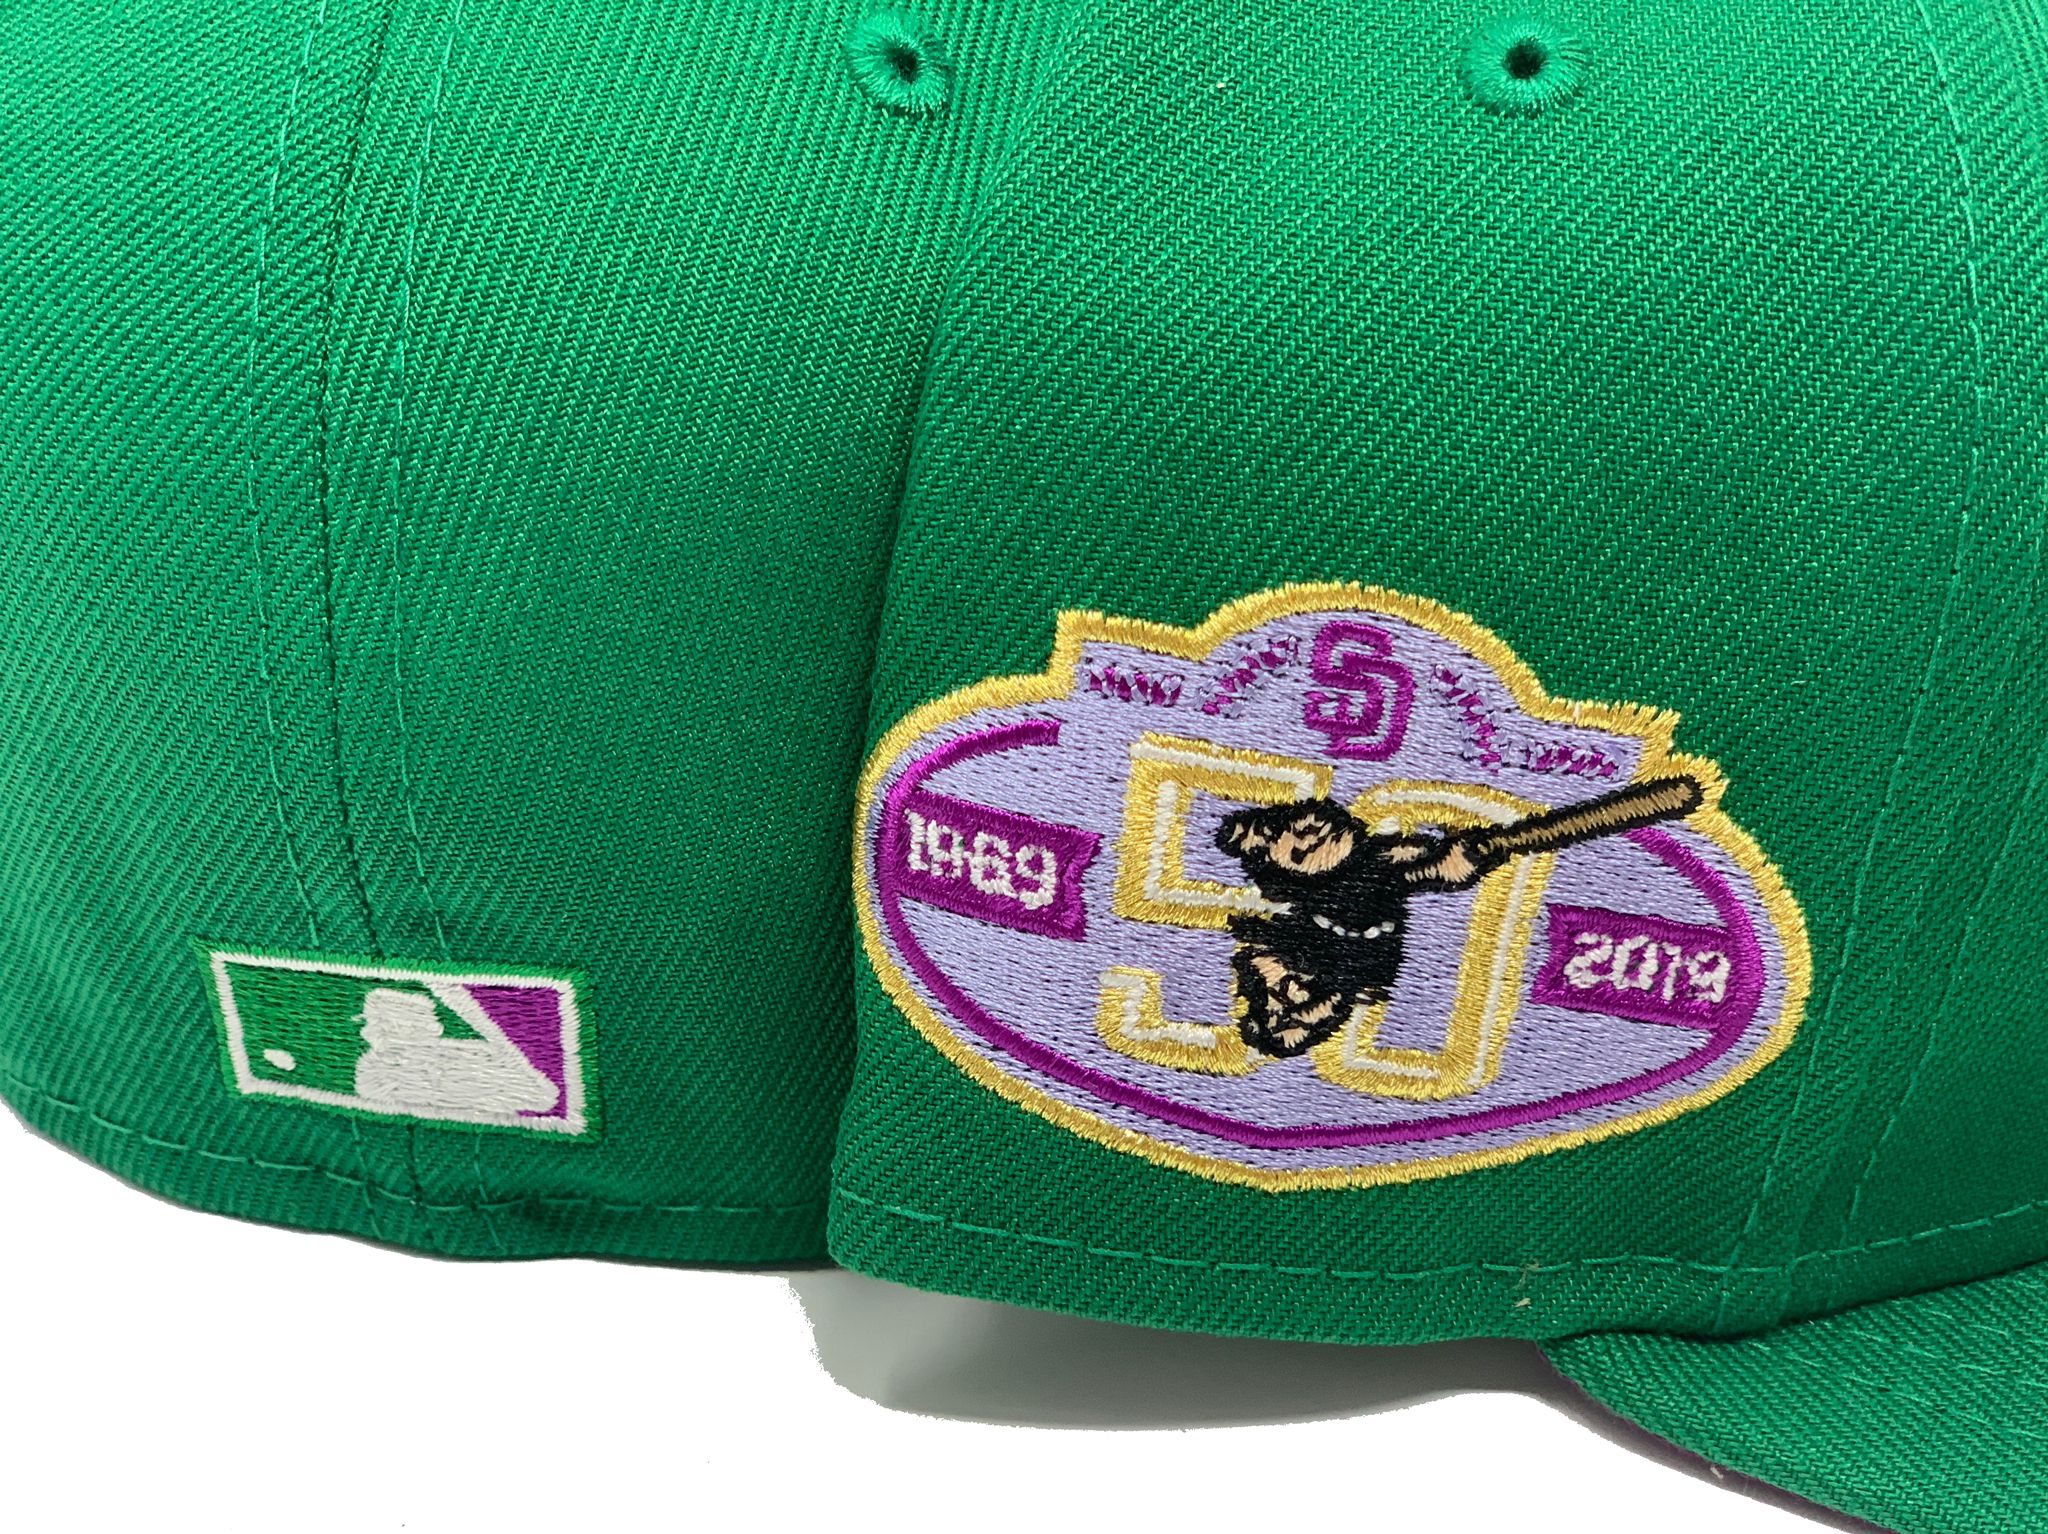 Purple San Diego Padres 40th Anniversary Custom New Era Fitted Hat